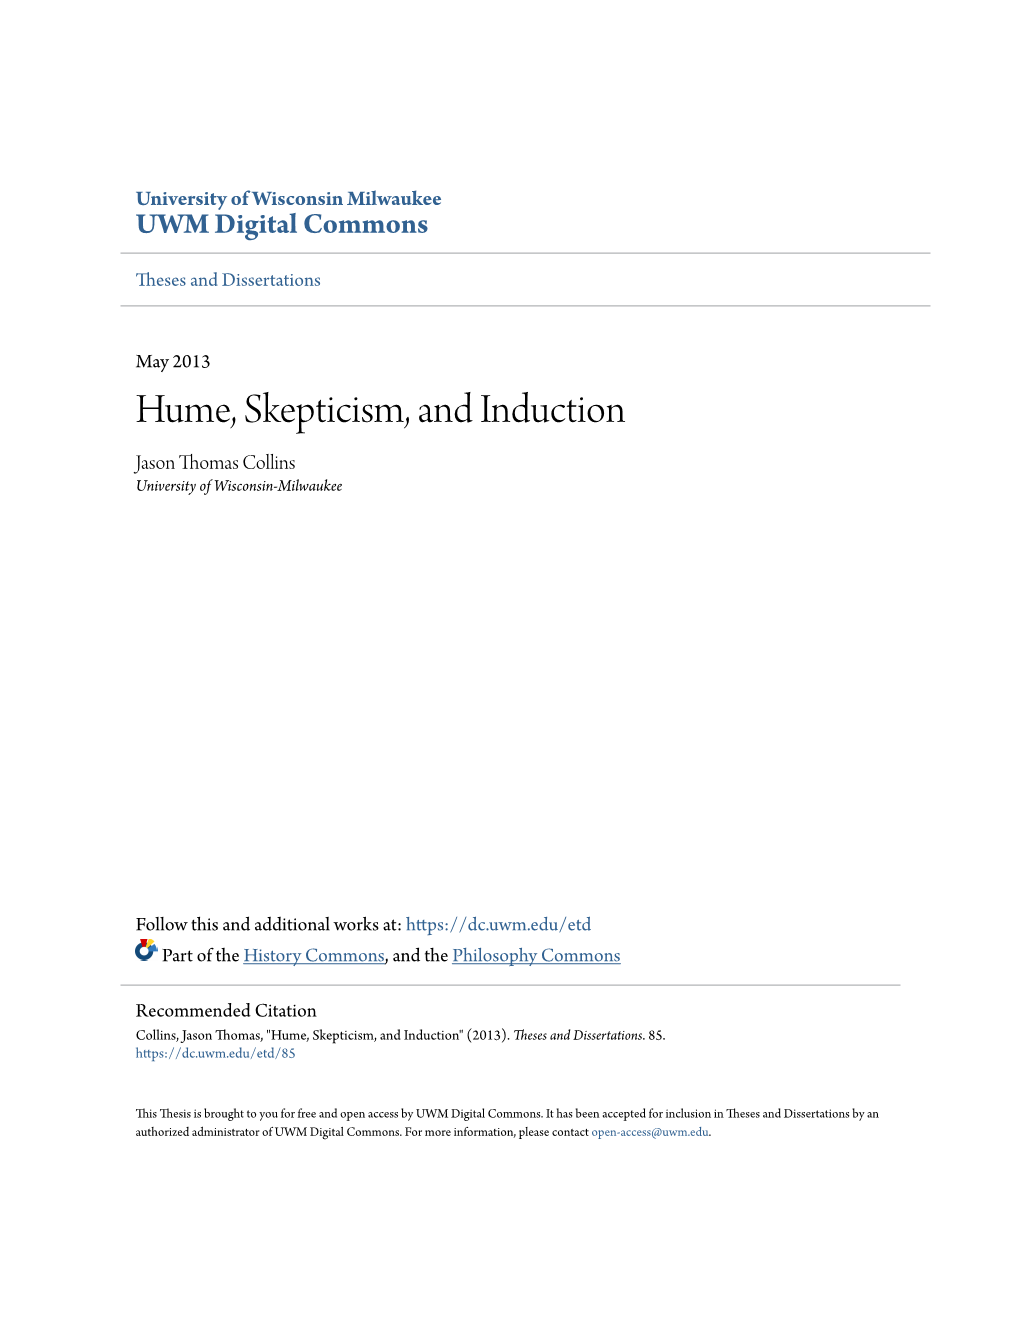 Hume, Skepticism, and Induction Jason Thomas Collins University of Wisconsin-Milwaukee